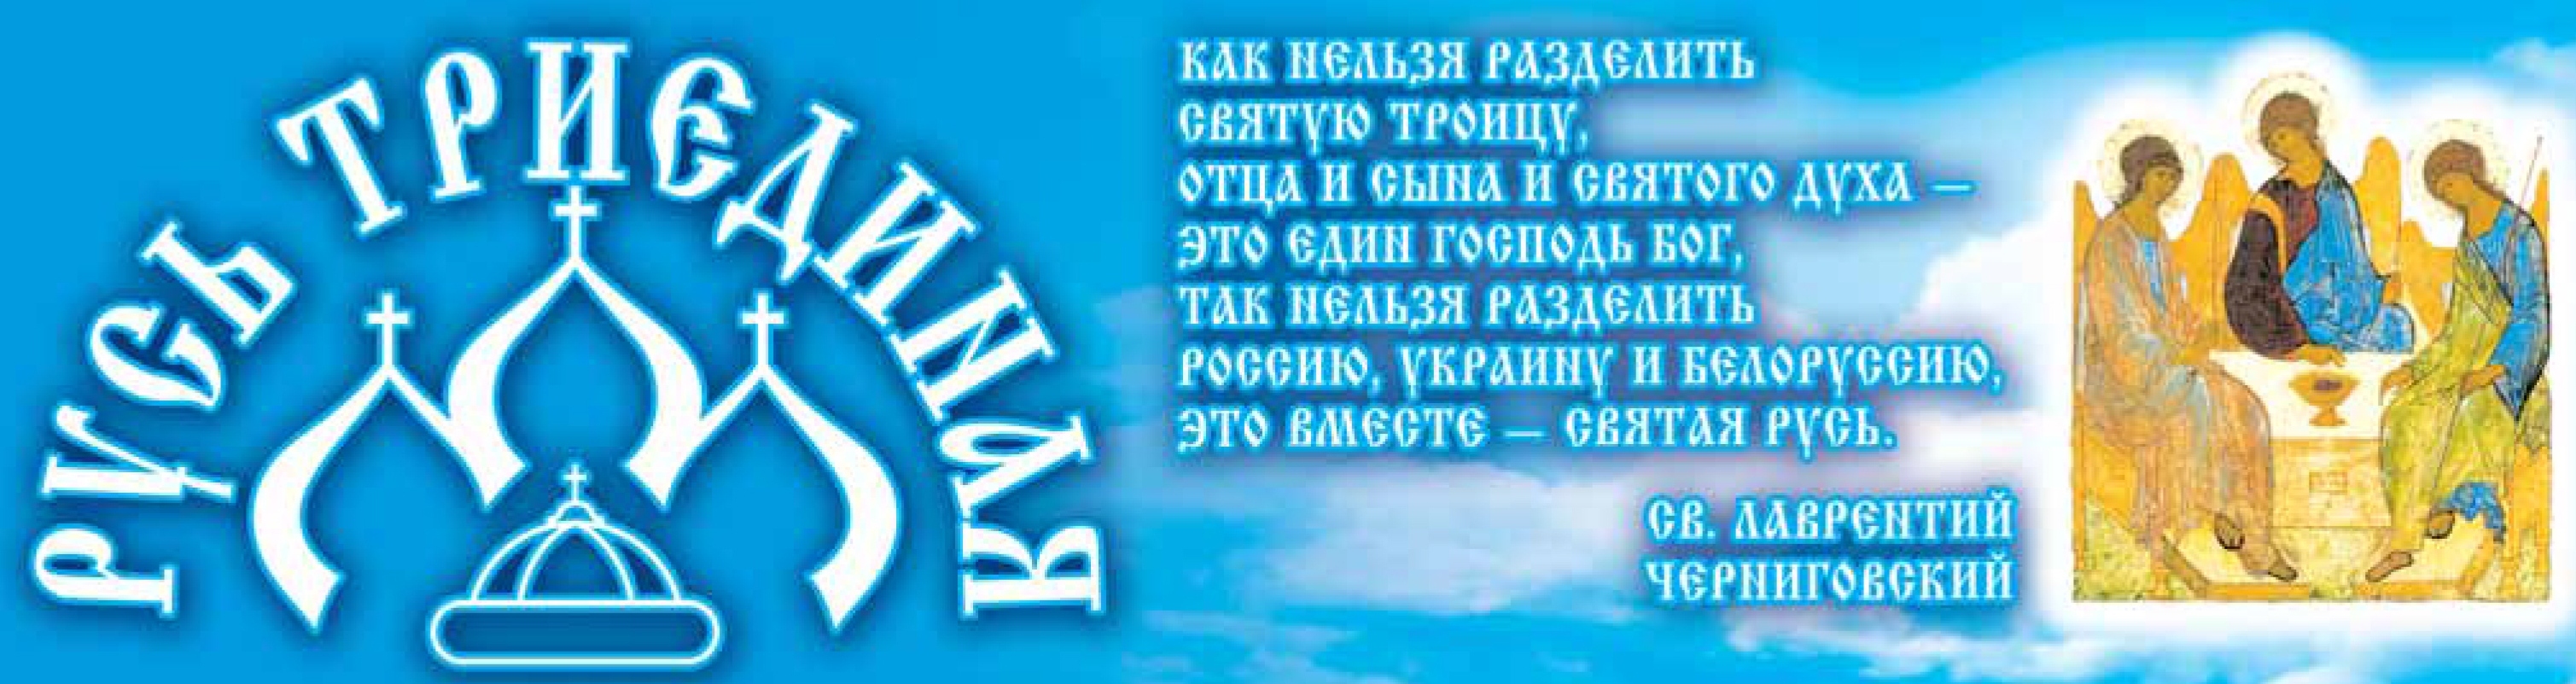 Logo_Rus.jpg